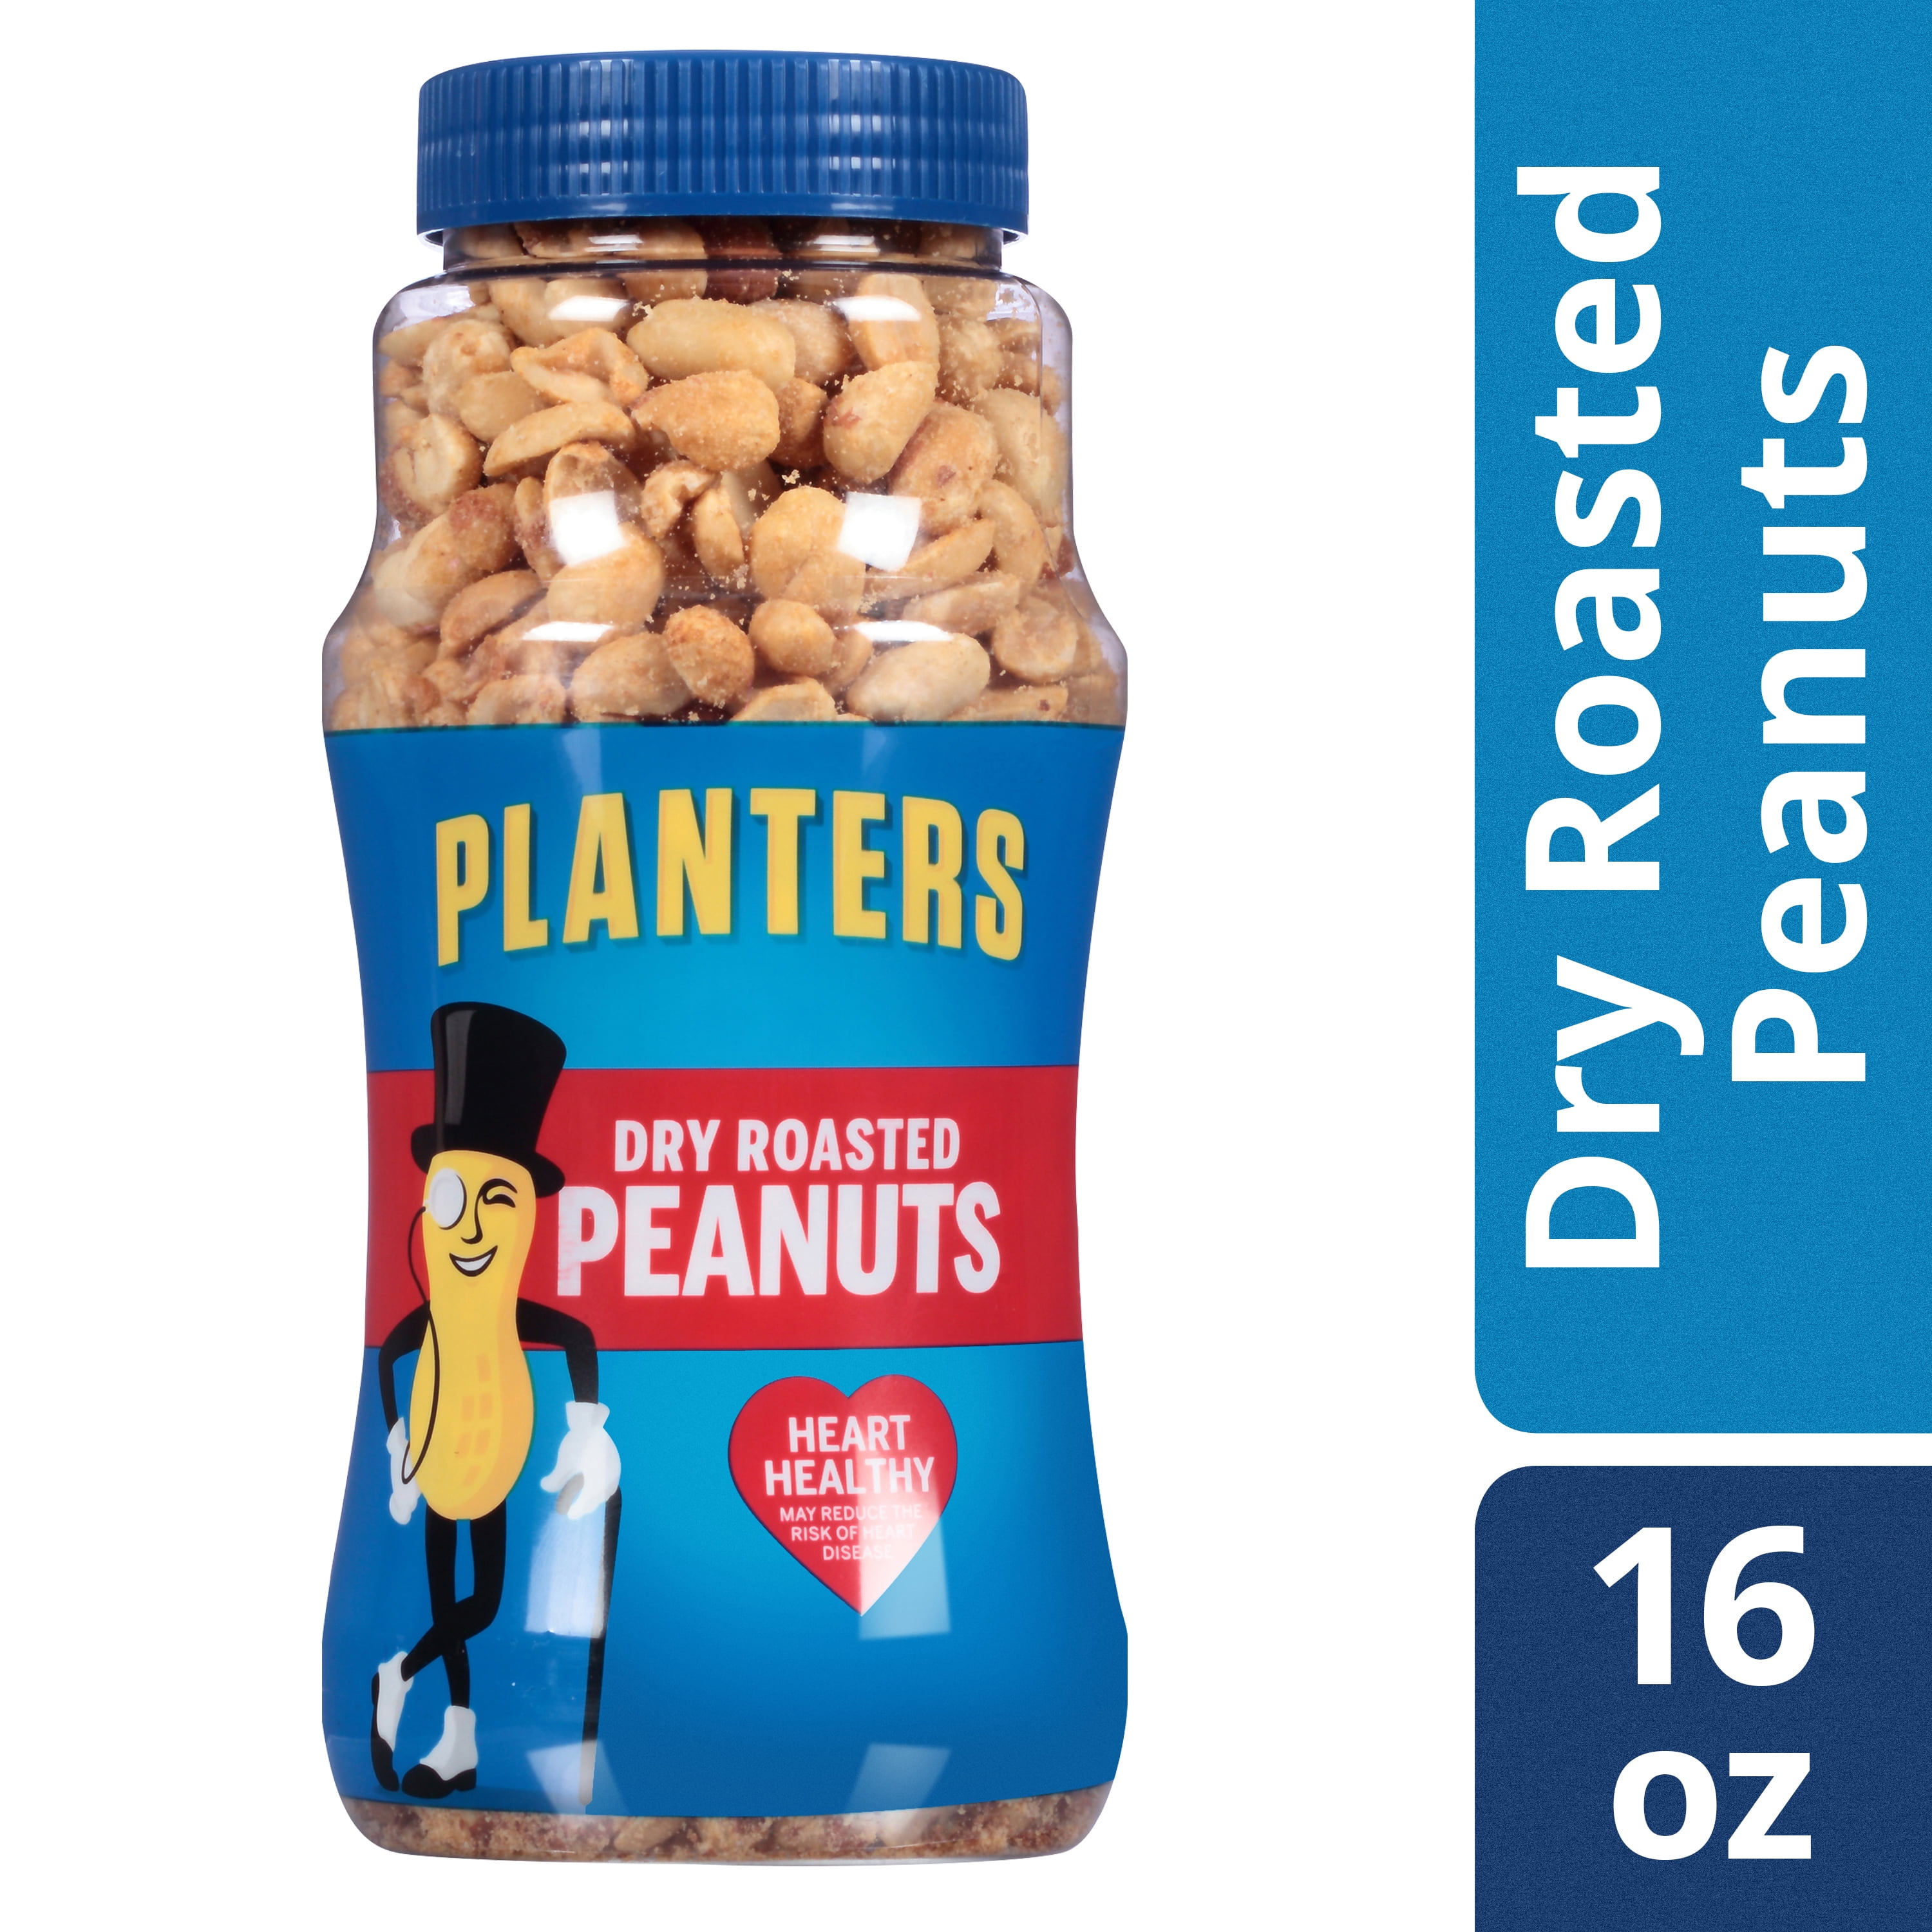 Planters Dry Roasted Peanuts, 16 oz Jar - Walmart.com3000 x 3000